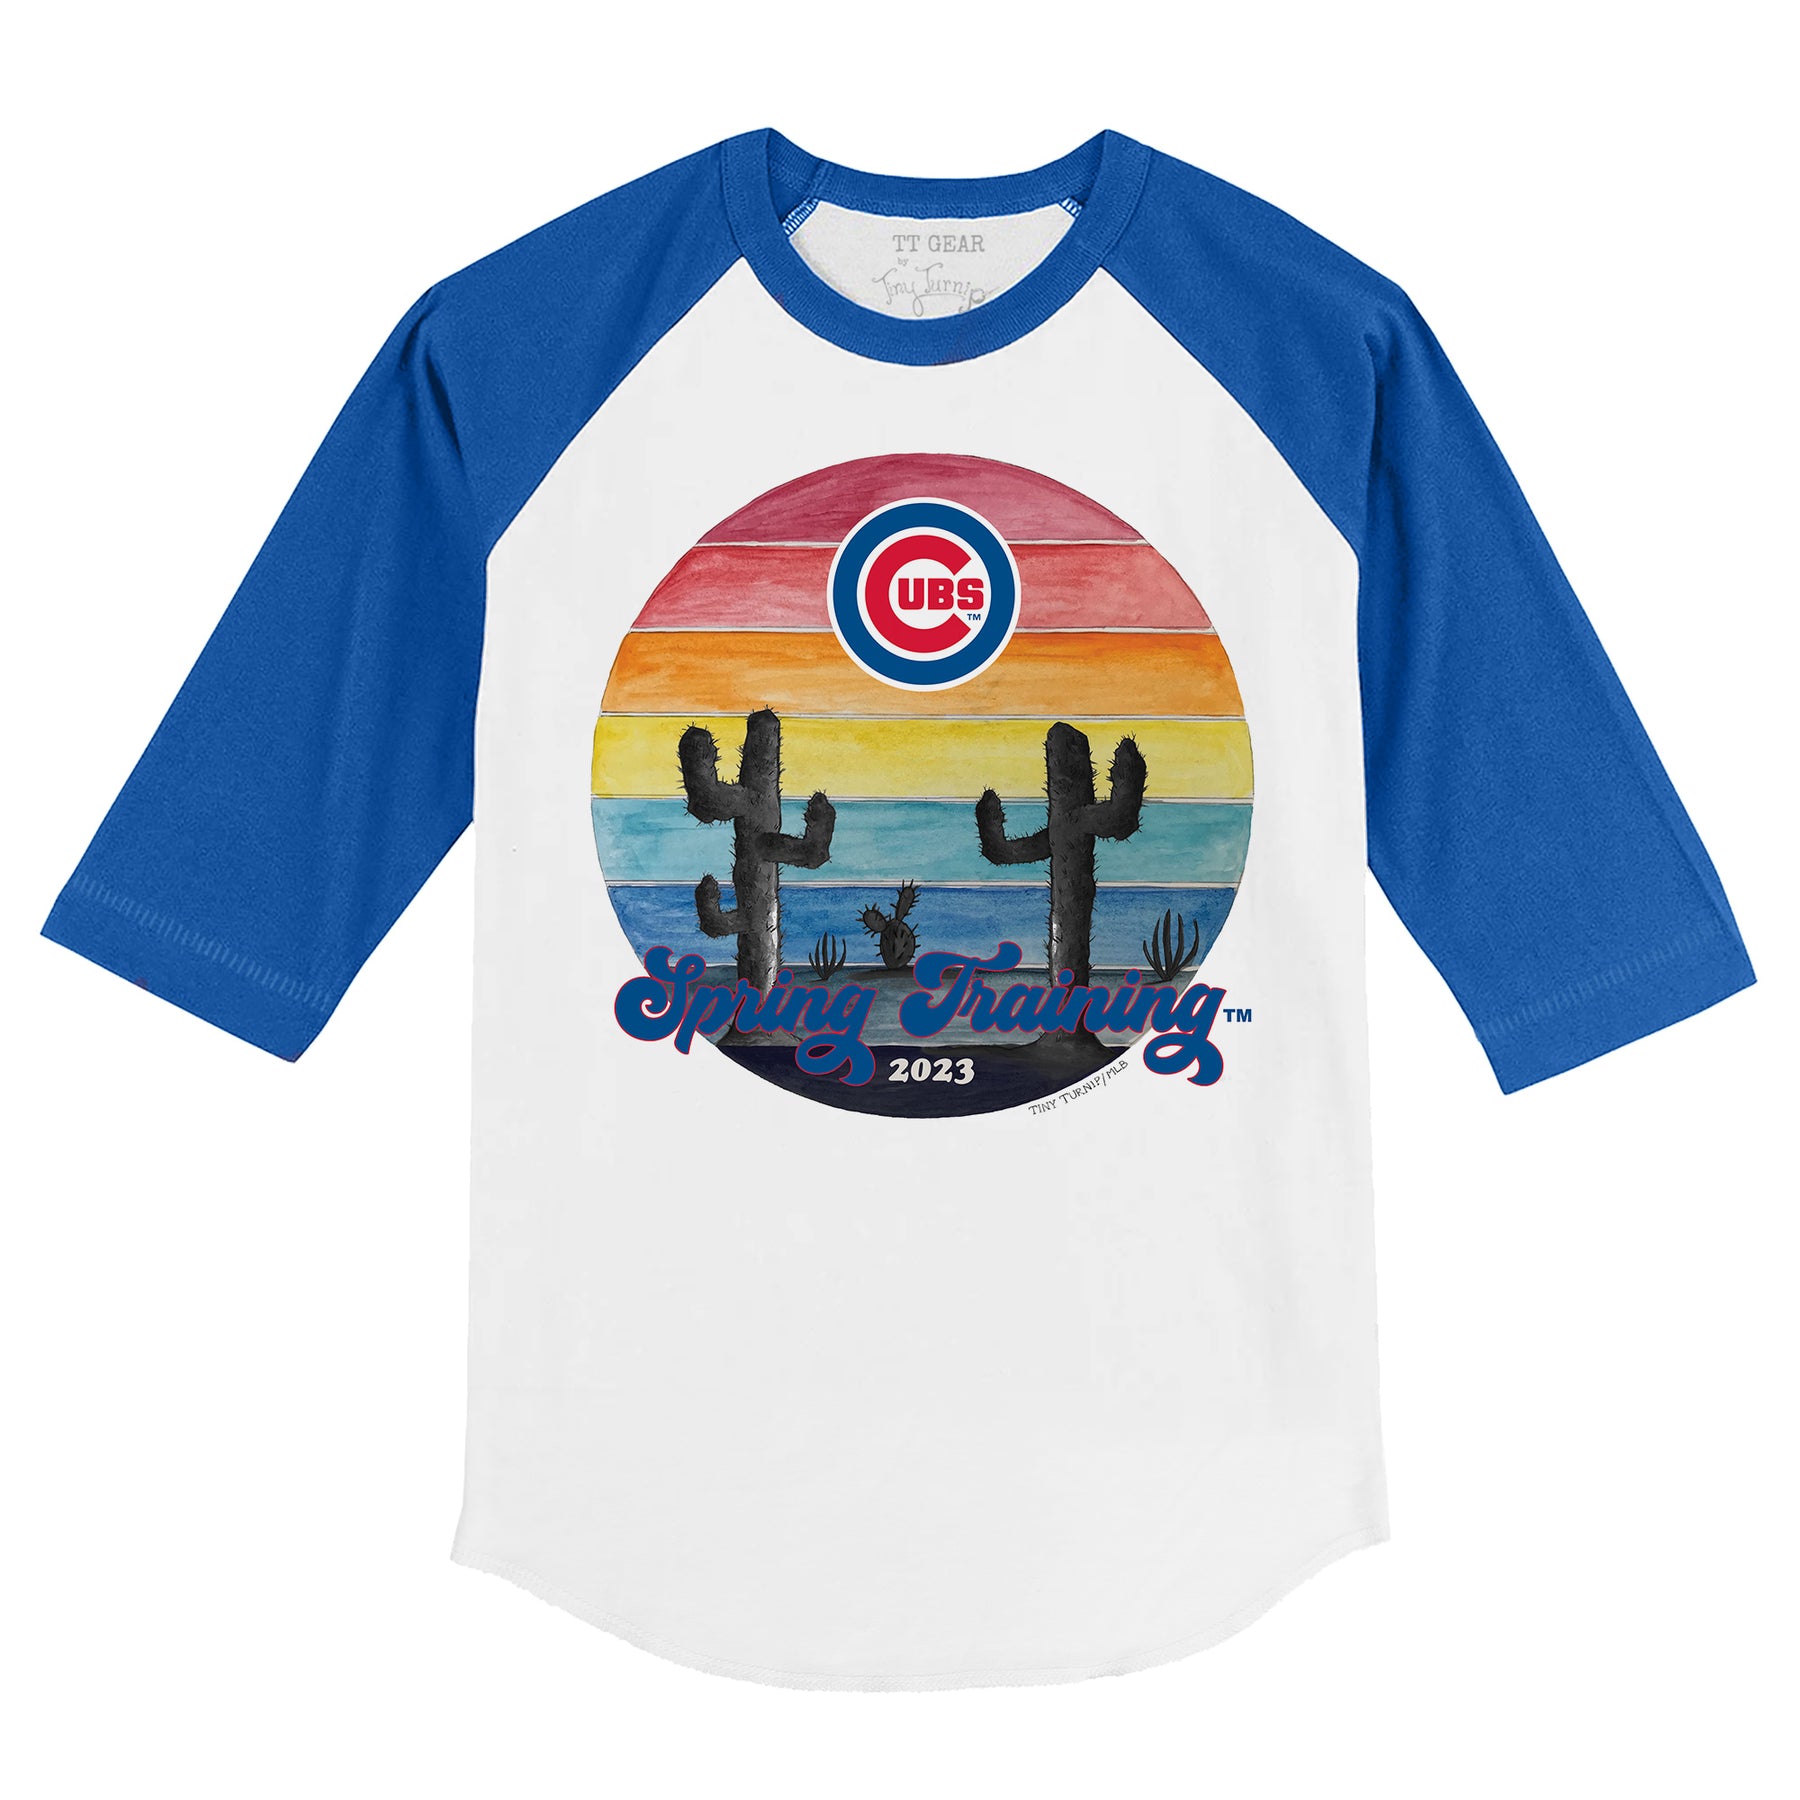 Blue Chicago Cubs MLB Jerseys for sale